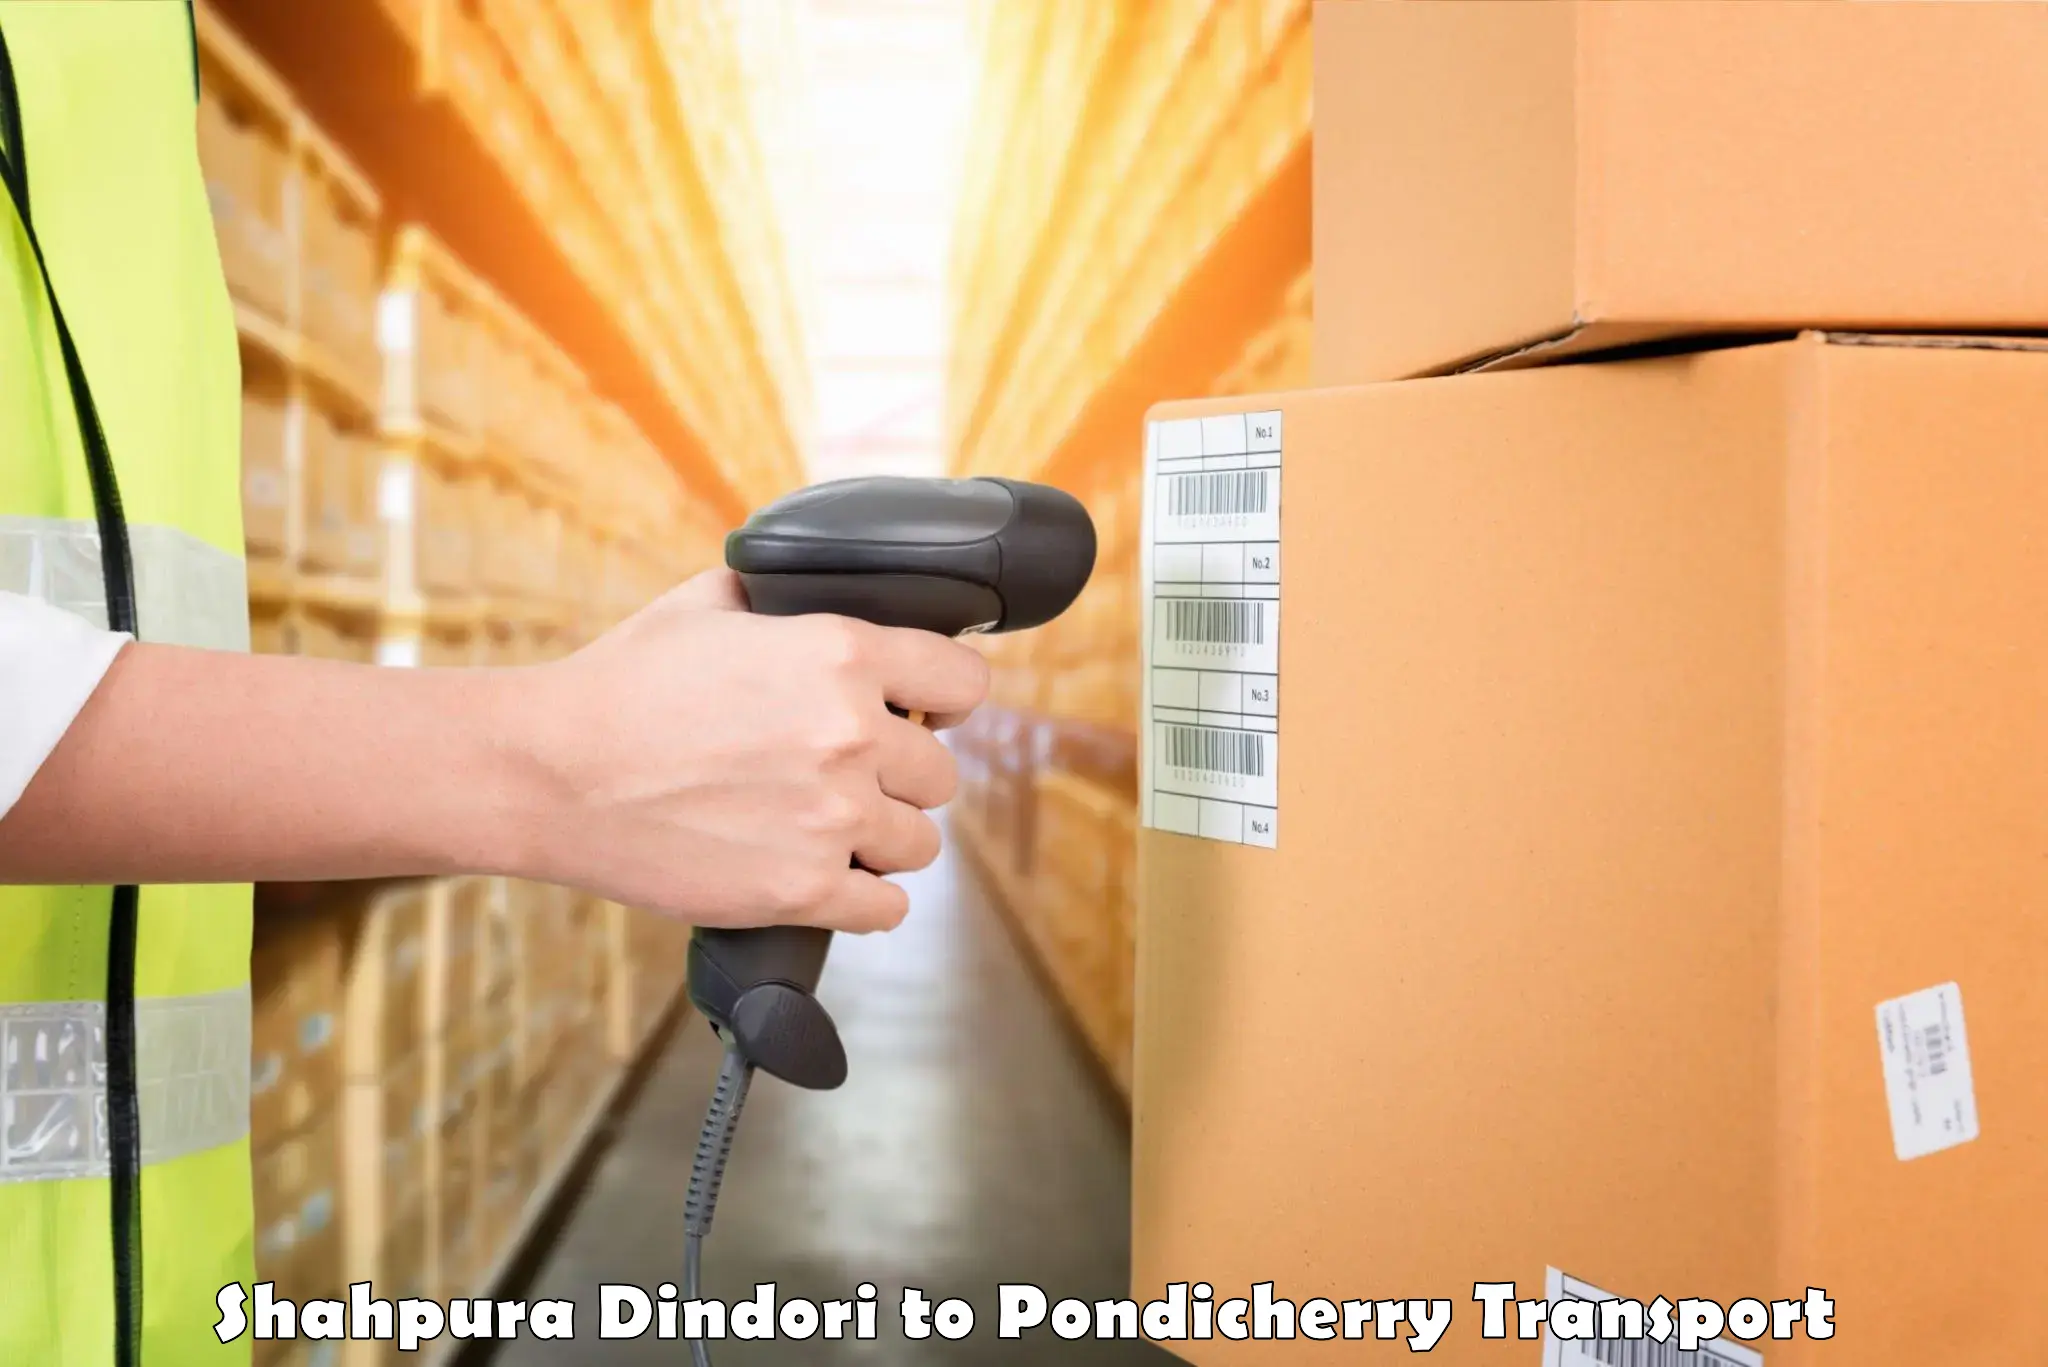 Truck transport companies in India Shahpura Dindori to Pondicherry